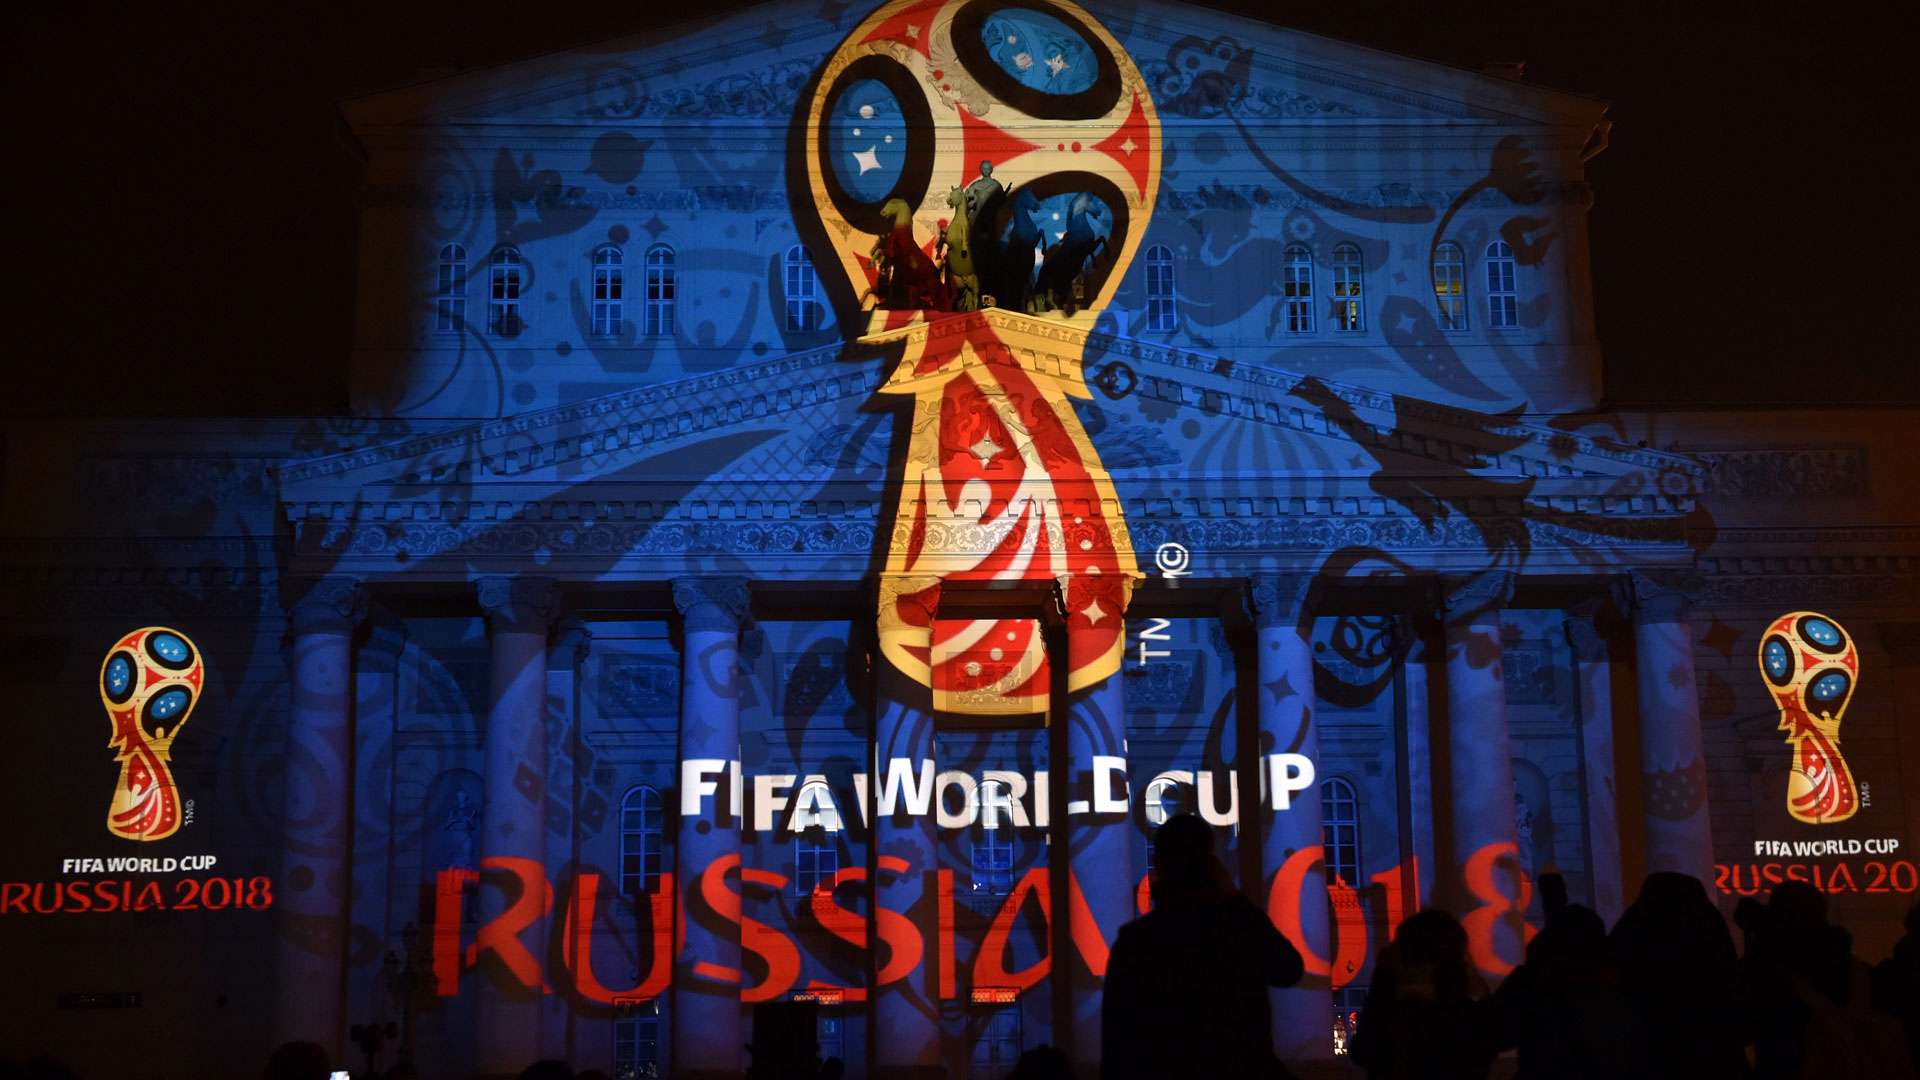 Russia 2018 WM World Cup Logo